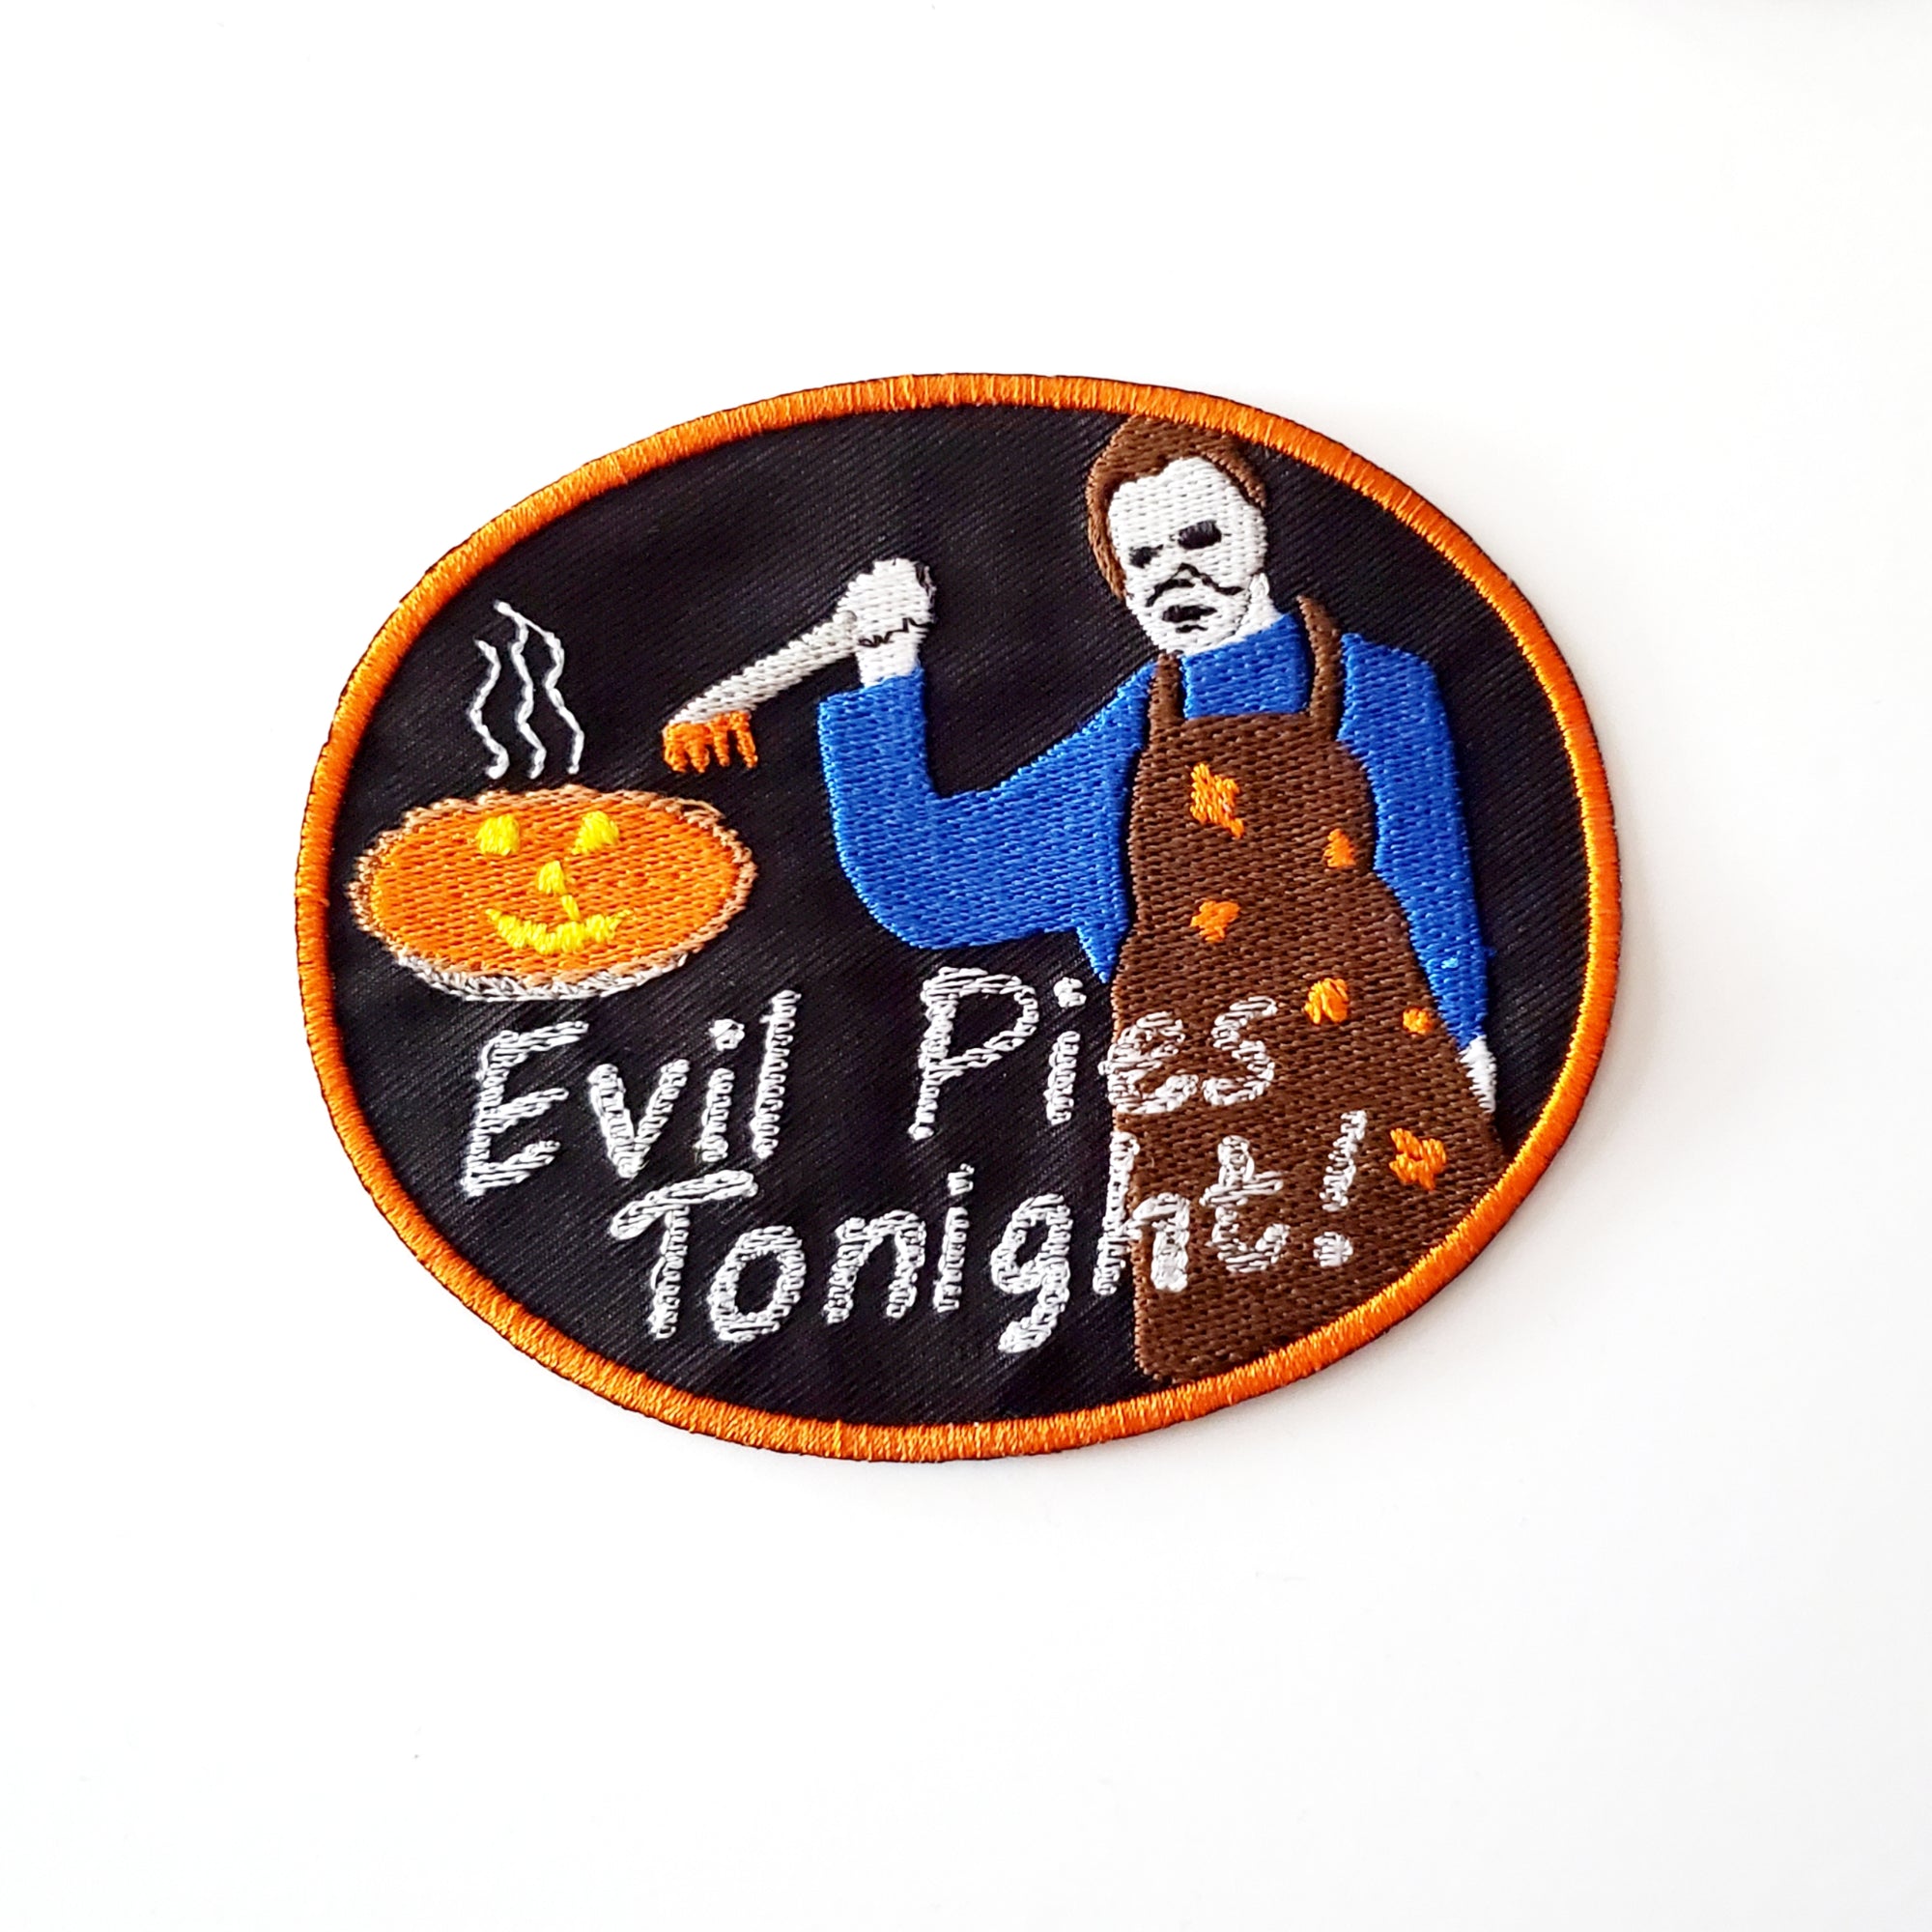 Evil Pies Tonight! Iron On Patch